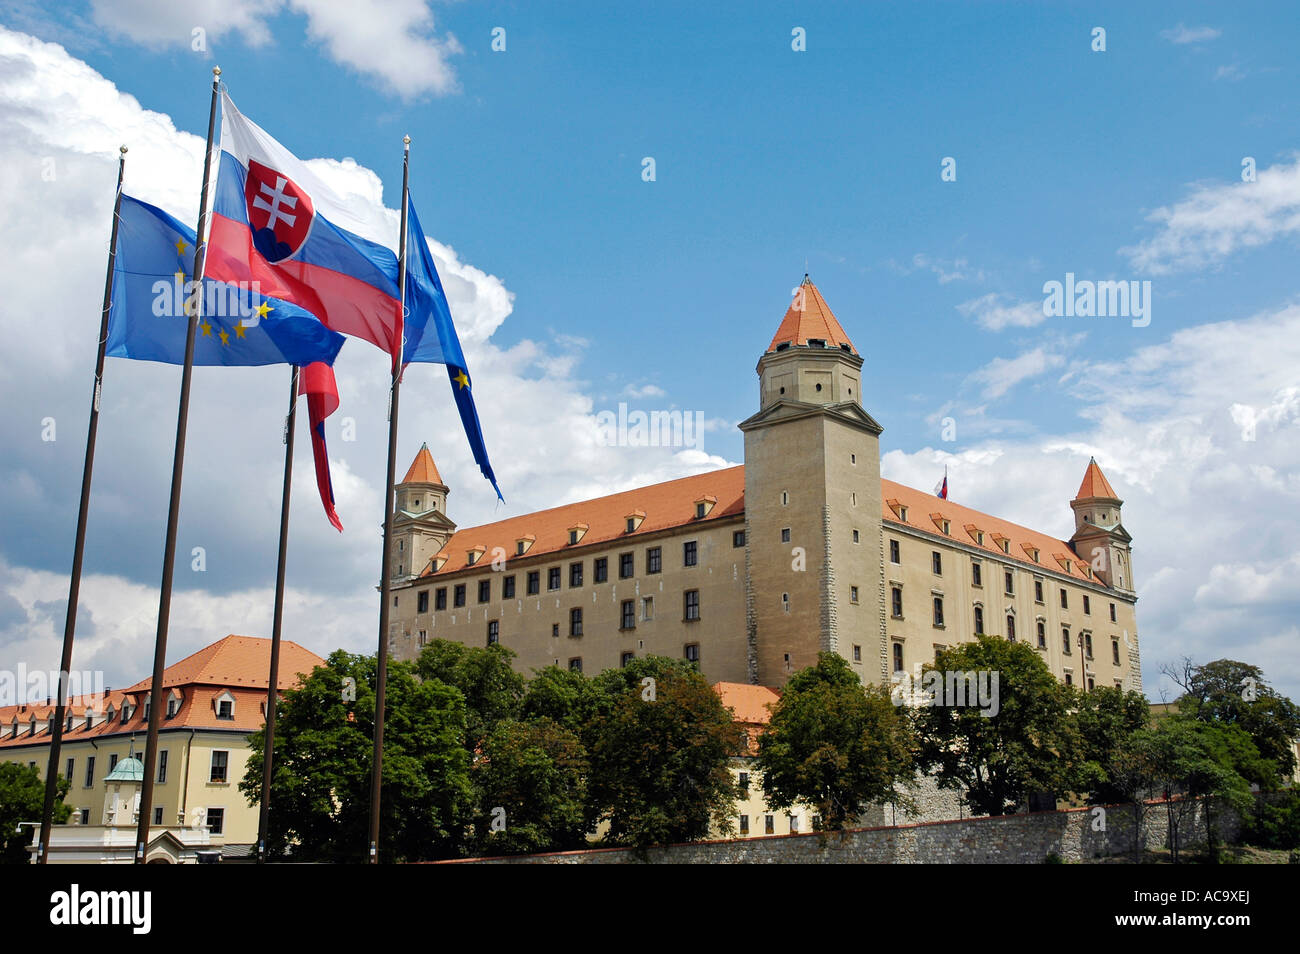 Slowakische und Europäische Union Flaggen, Burg von Bratislava, Bratislava, Slowakei Stockfoto